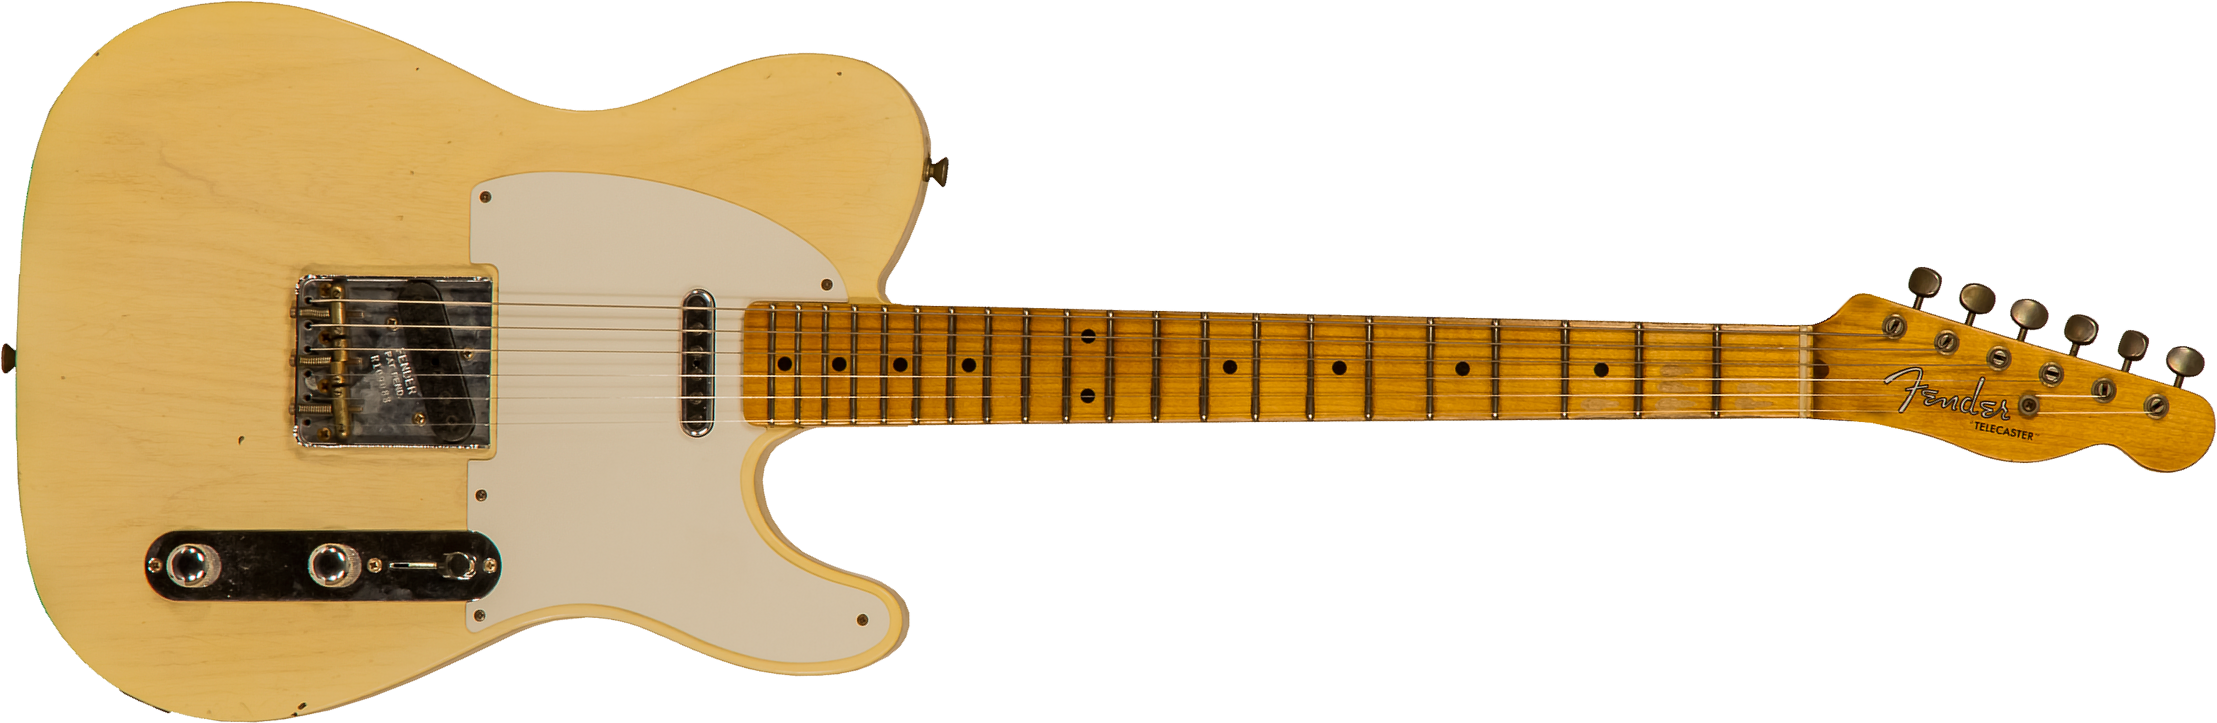 Fender Custom Shop Tele Tomatillo Ltd 2s Ht Mn #r109088 - Journeyman Relic Natural Blonde - E-Gitarre in Teleform - Main picture